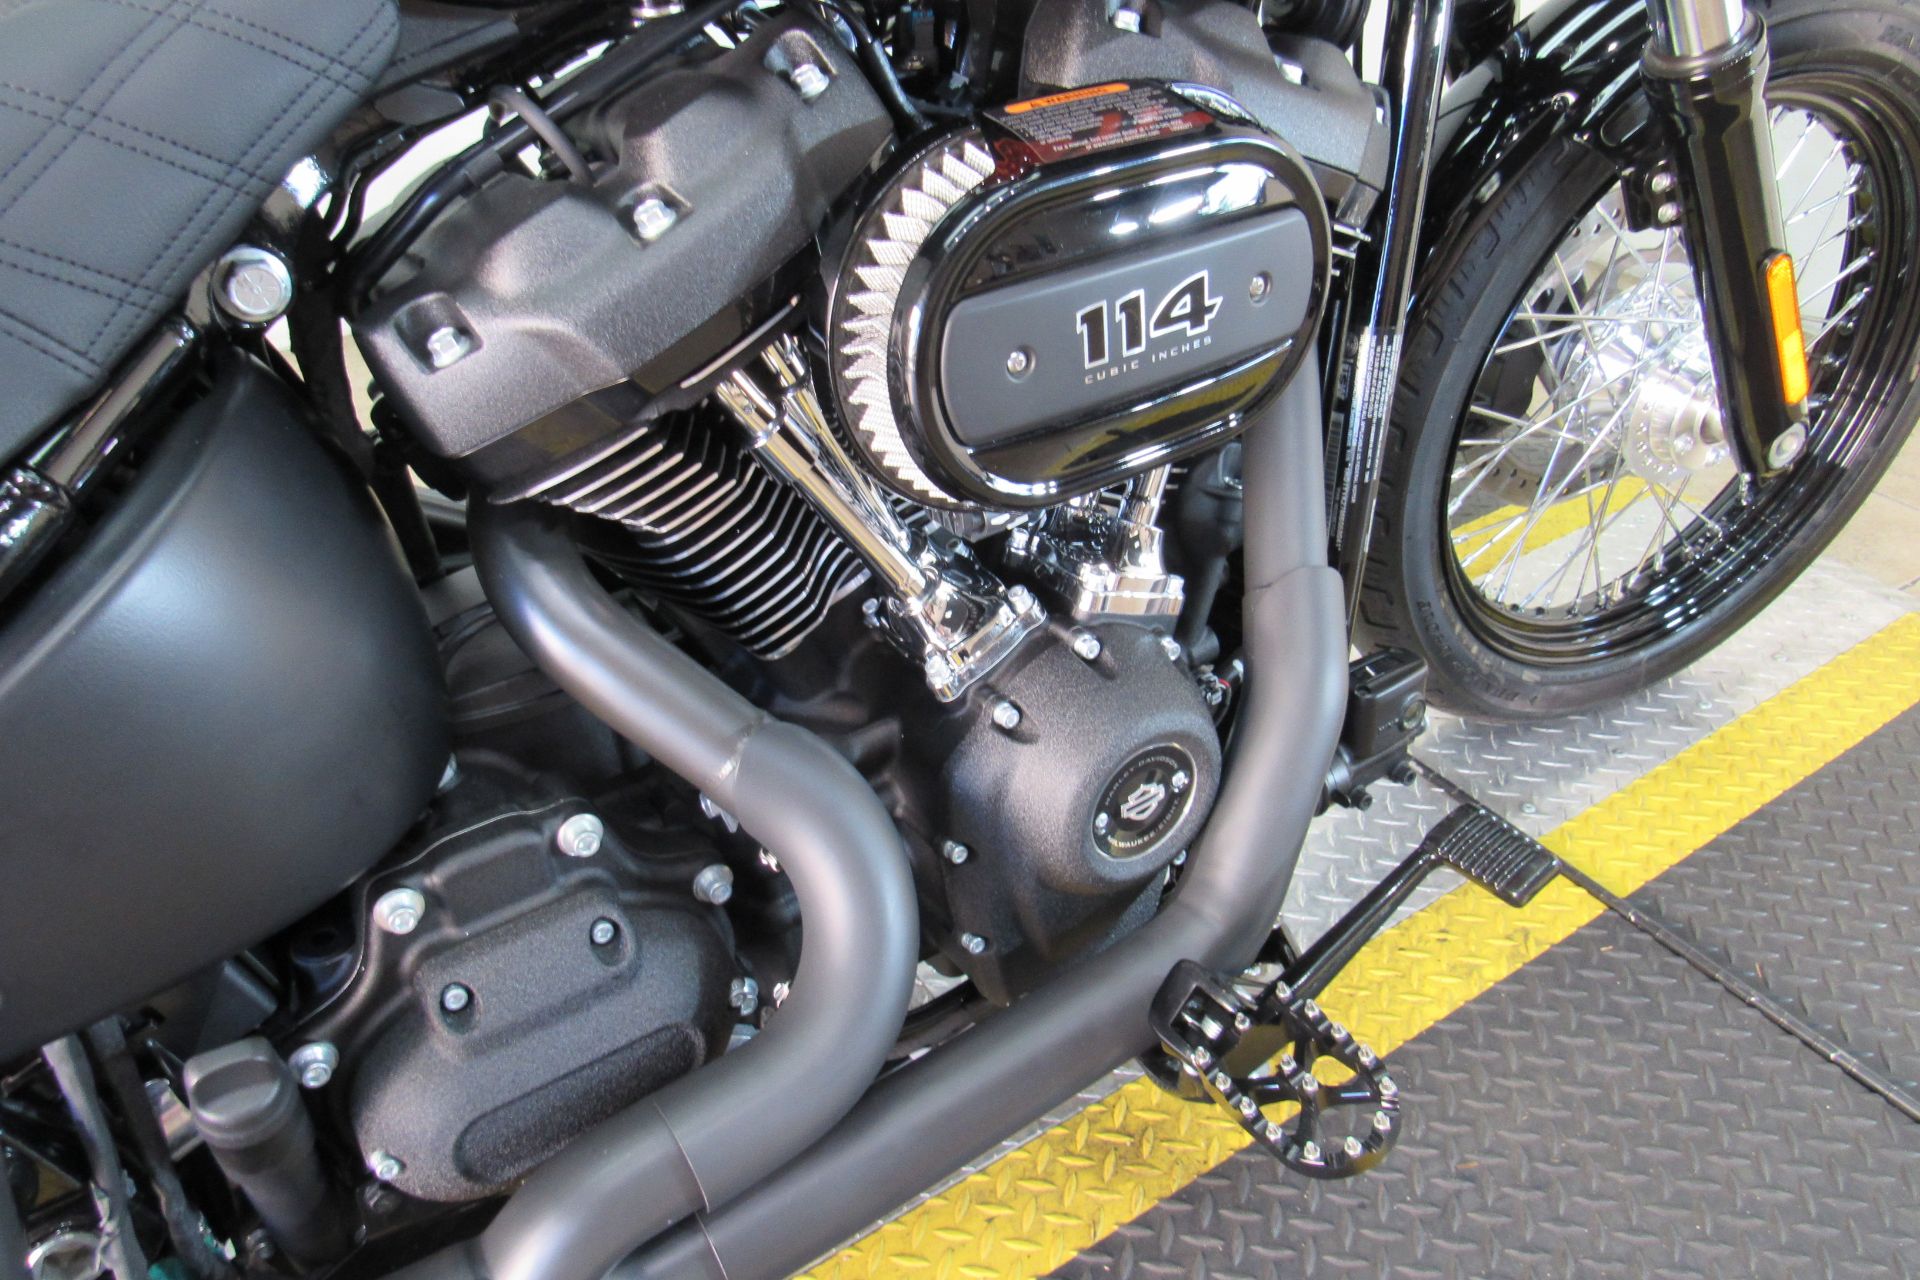 2021 Harley-Davidson Street Bob® 114 in Temecula, California - Photo 16